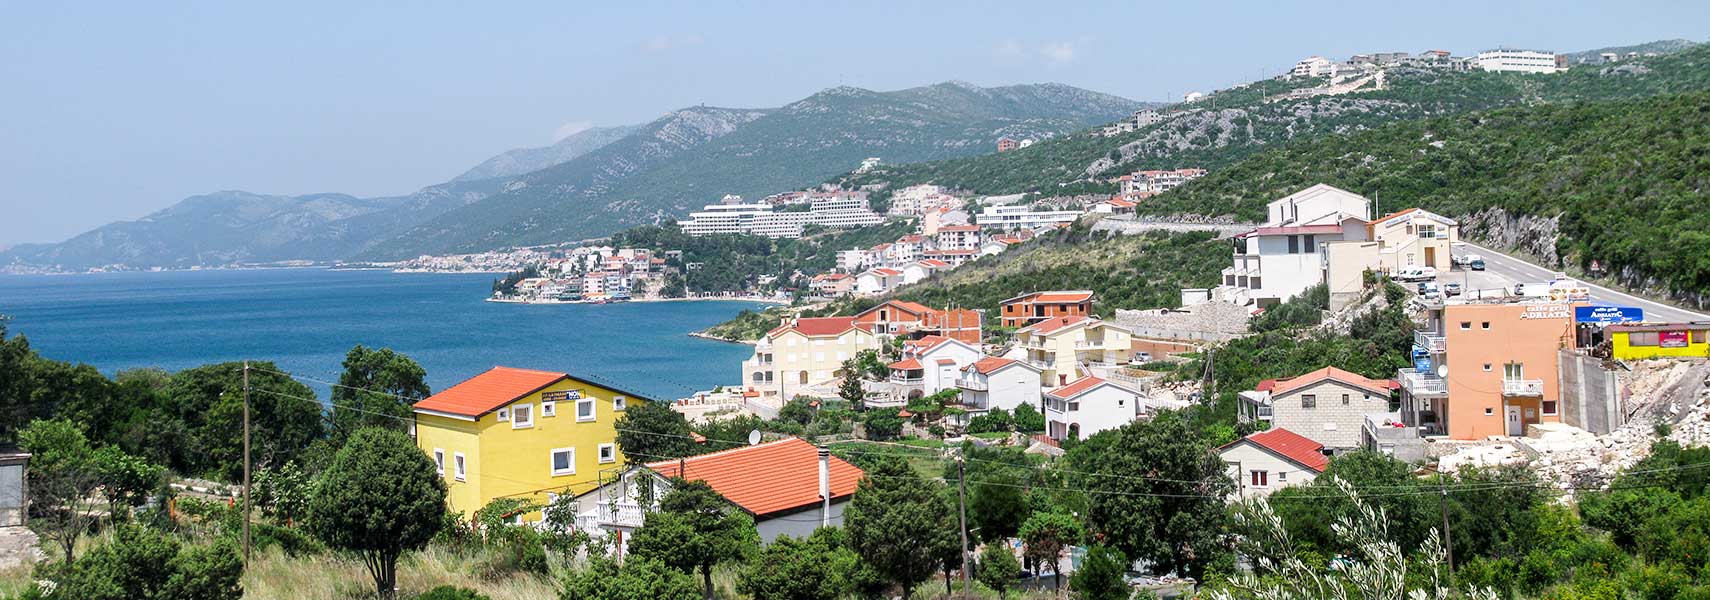 View of Bosnia and Herzegovina's coastline towards the town of Neum